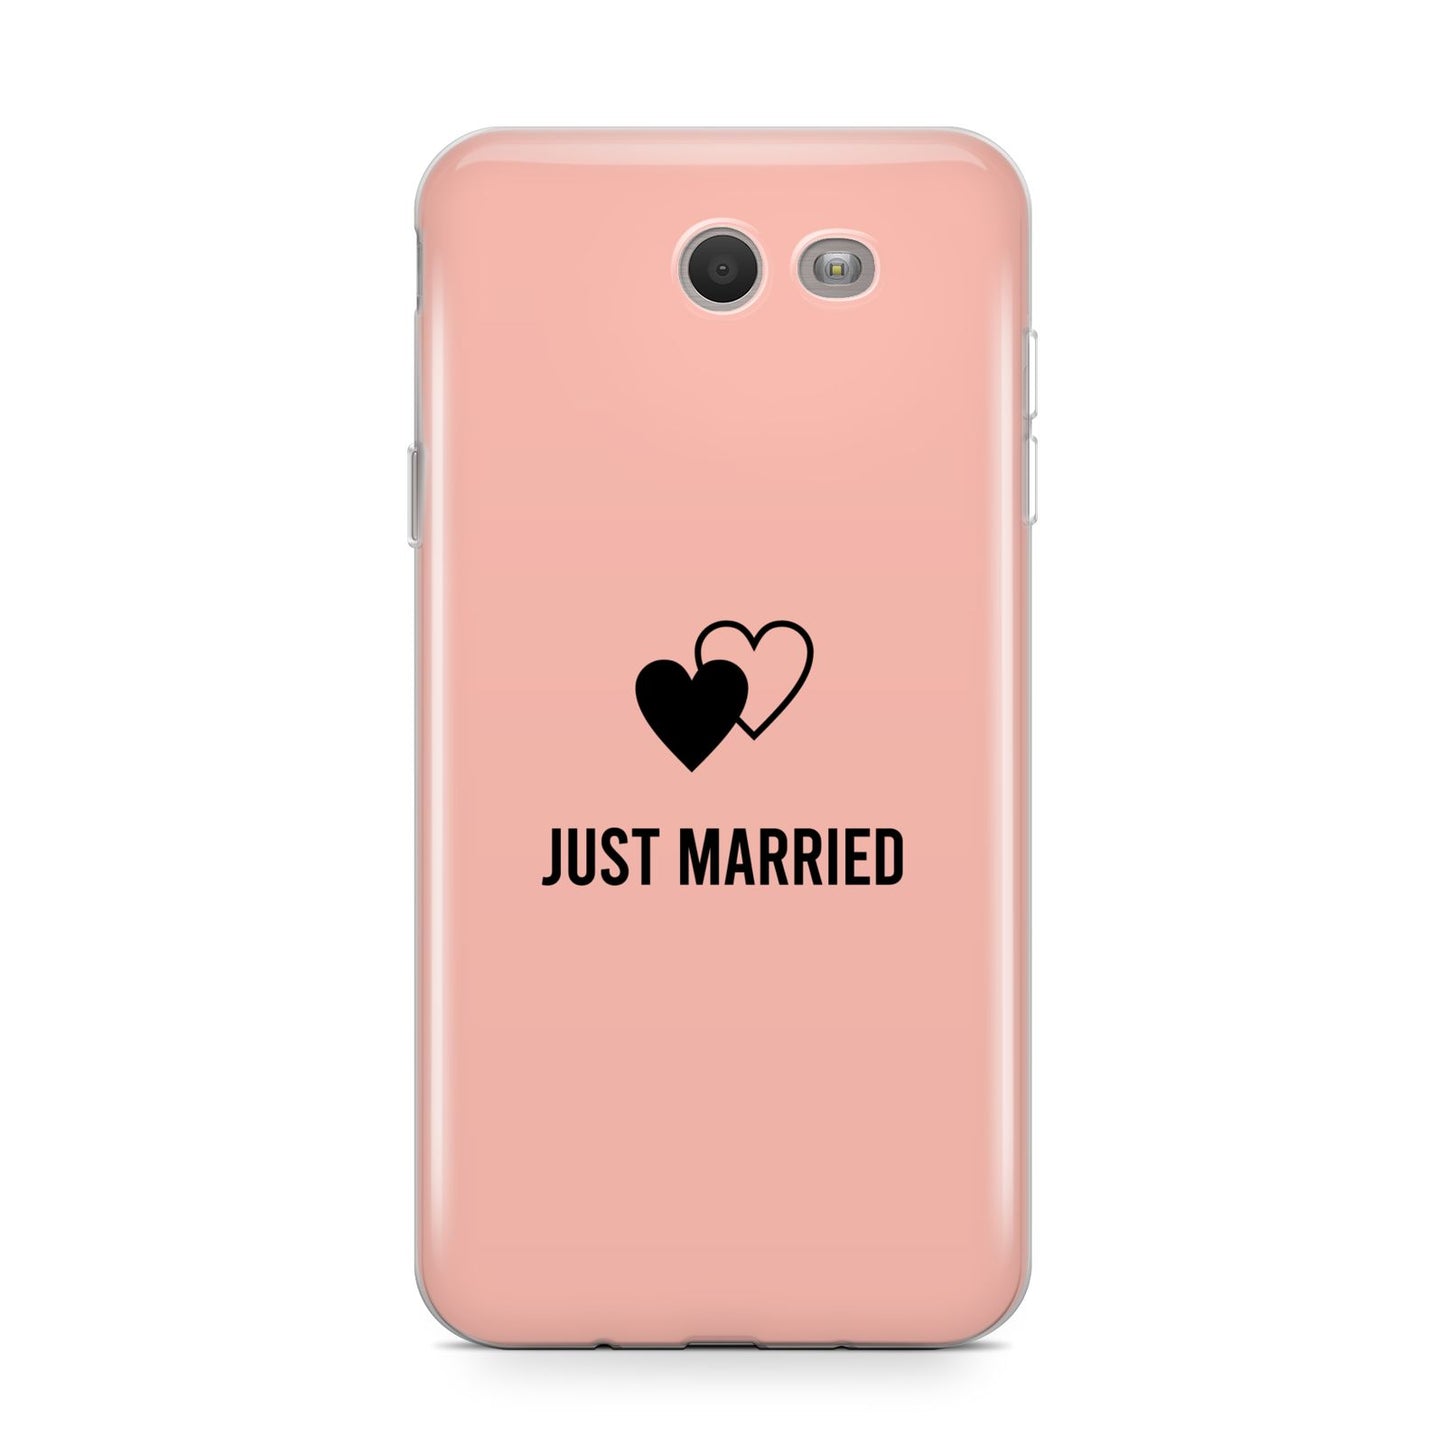 Just Married Samsung Galaxy J7 2017 Case